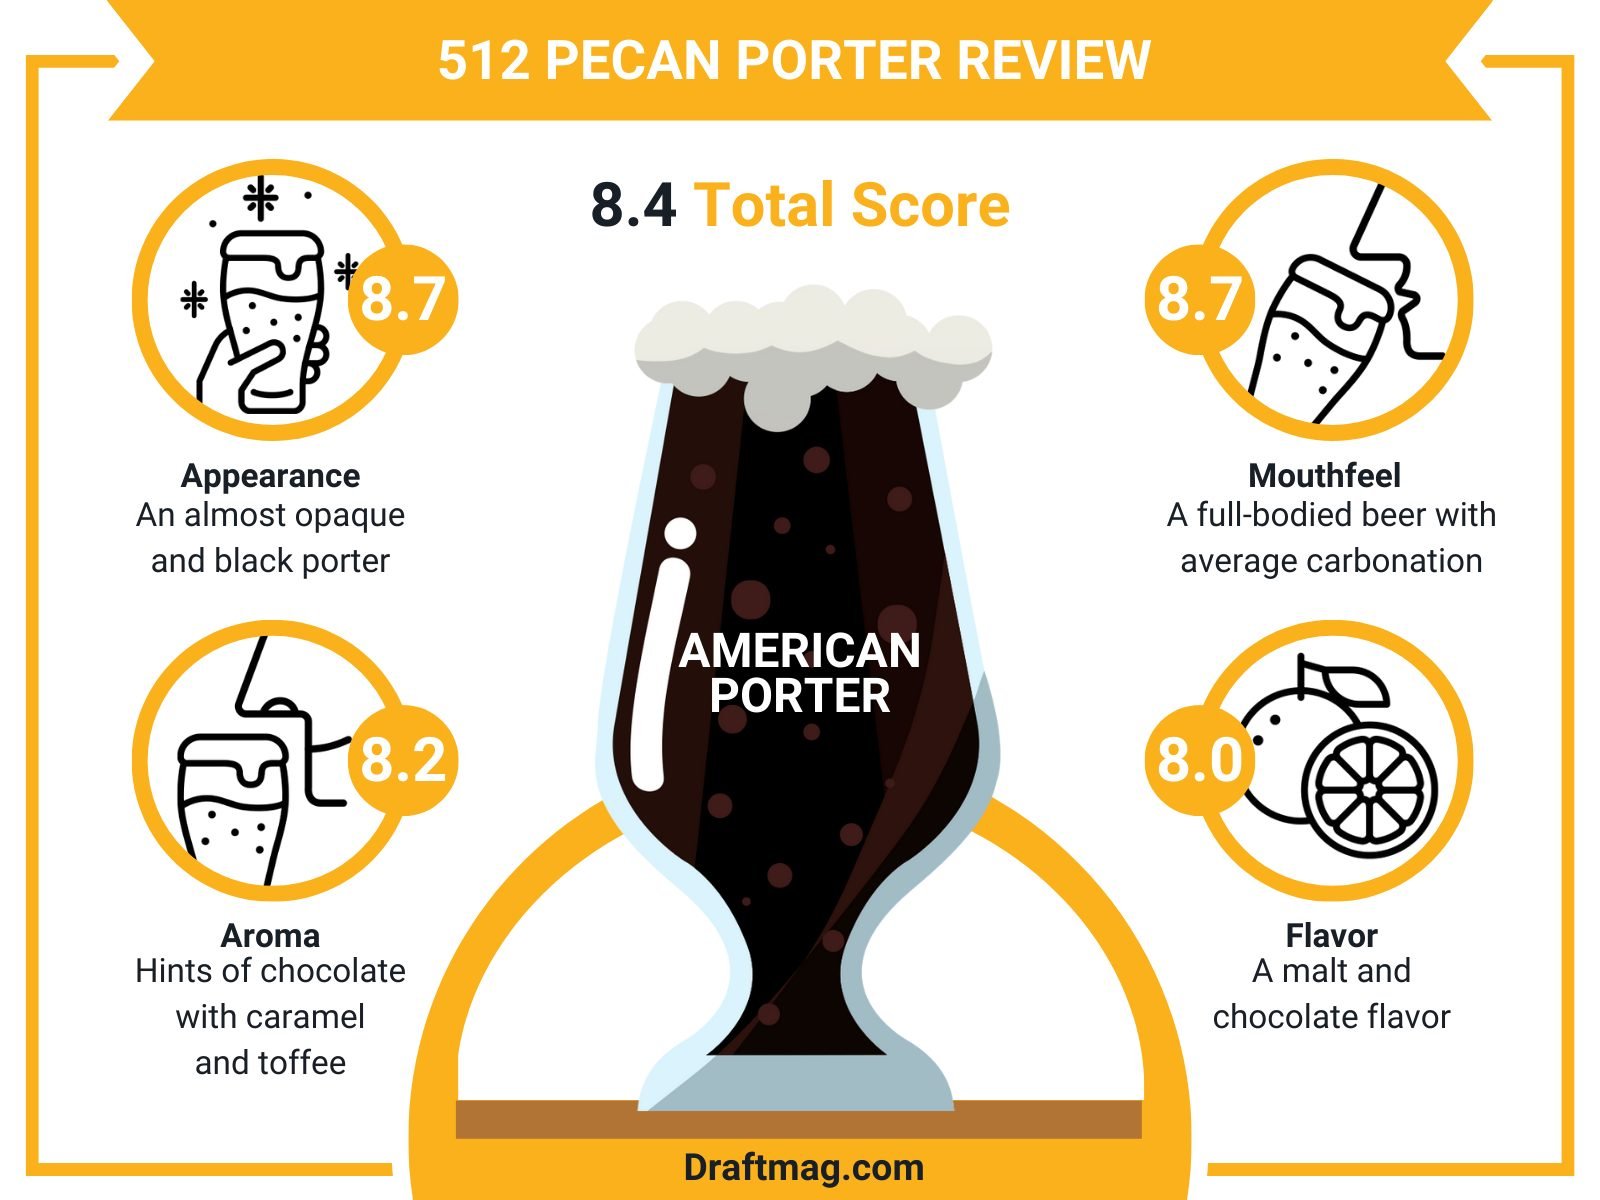 512 Pecan Porter Review Infographic